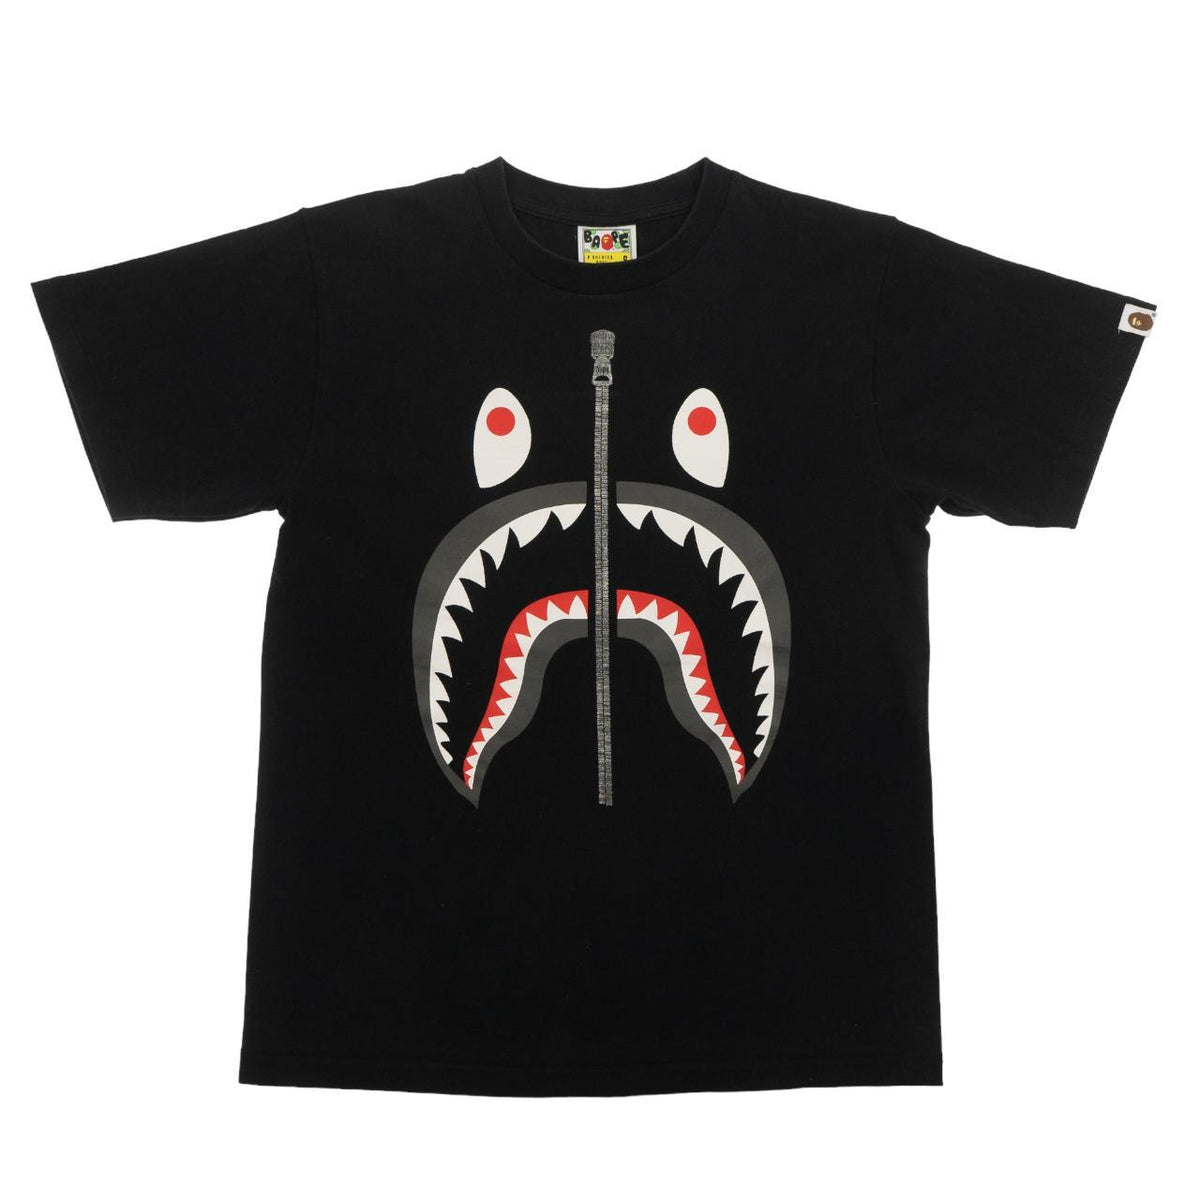 Vintage Bape Shark T Shirt Size XS